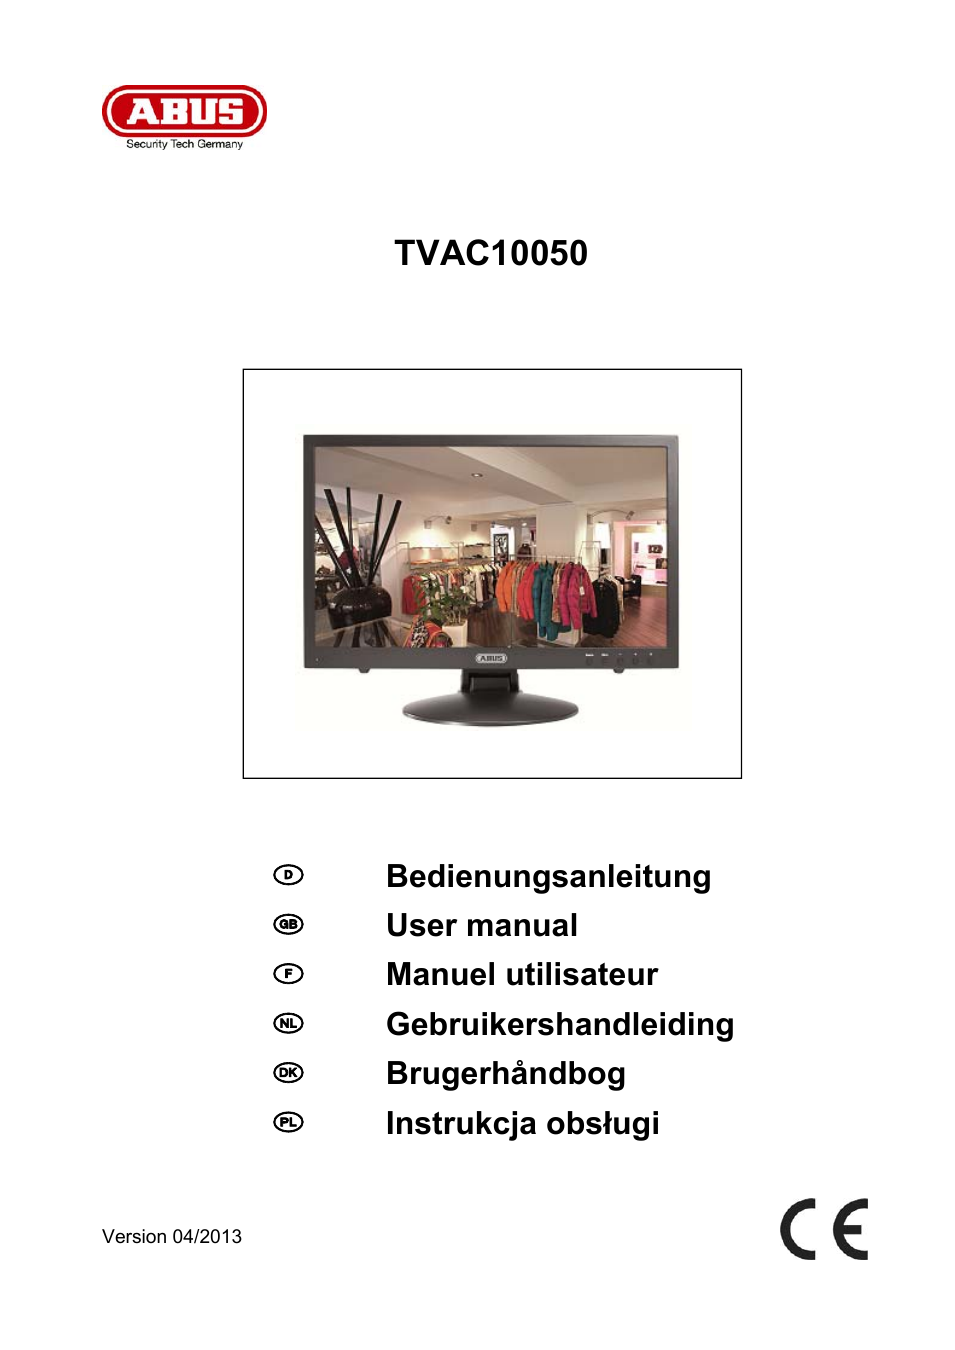 TVAC10050 Operating instructions